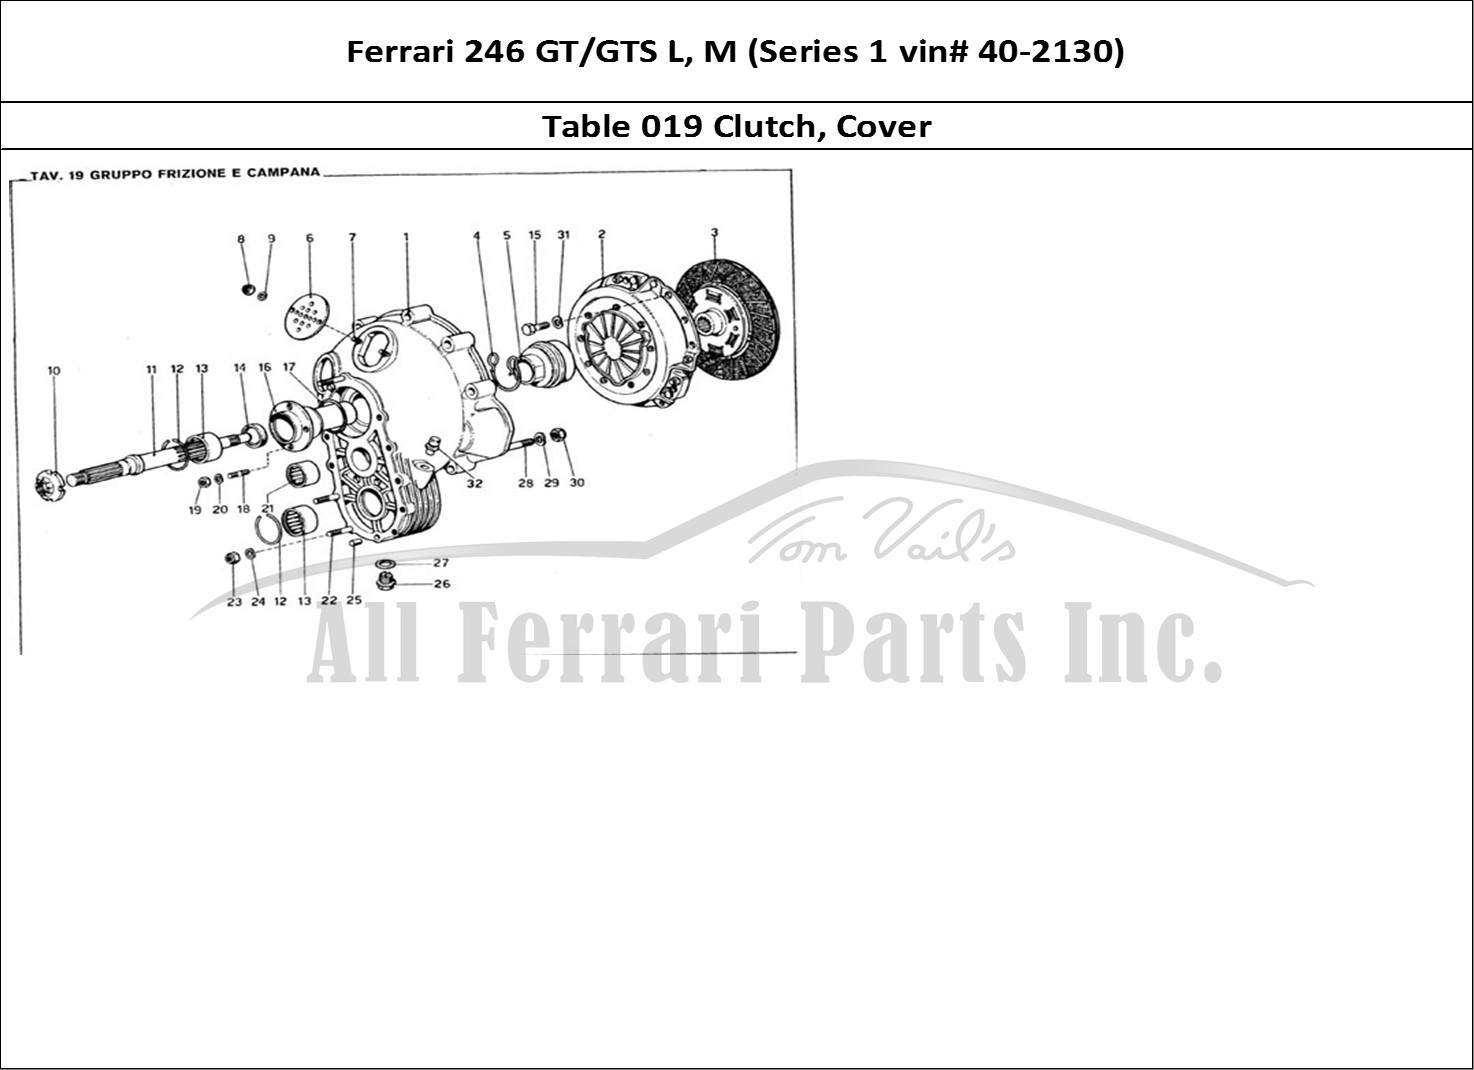 Ferrari Parts Ferrari 246 GT Series 1 Page 019 Clutch Unit and Cover